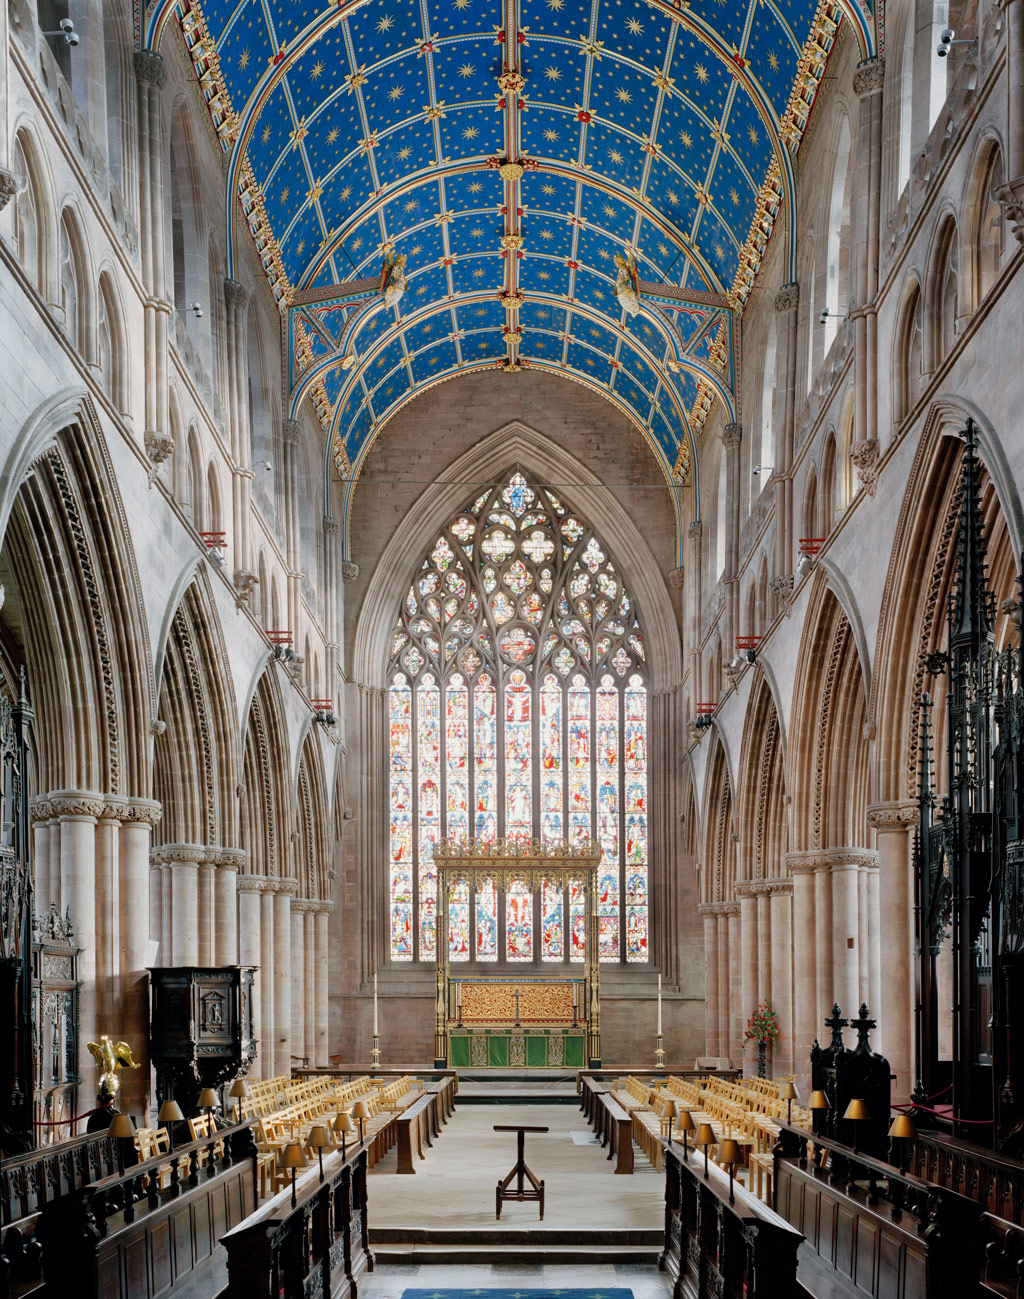 Peter Marlow, Carlisle Cathedral, 2010